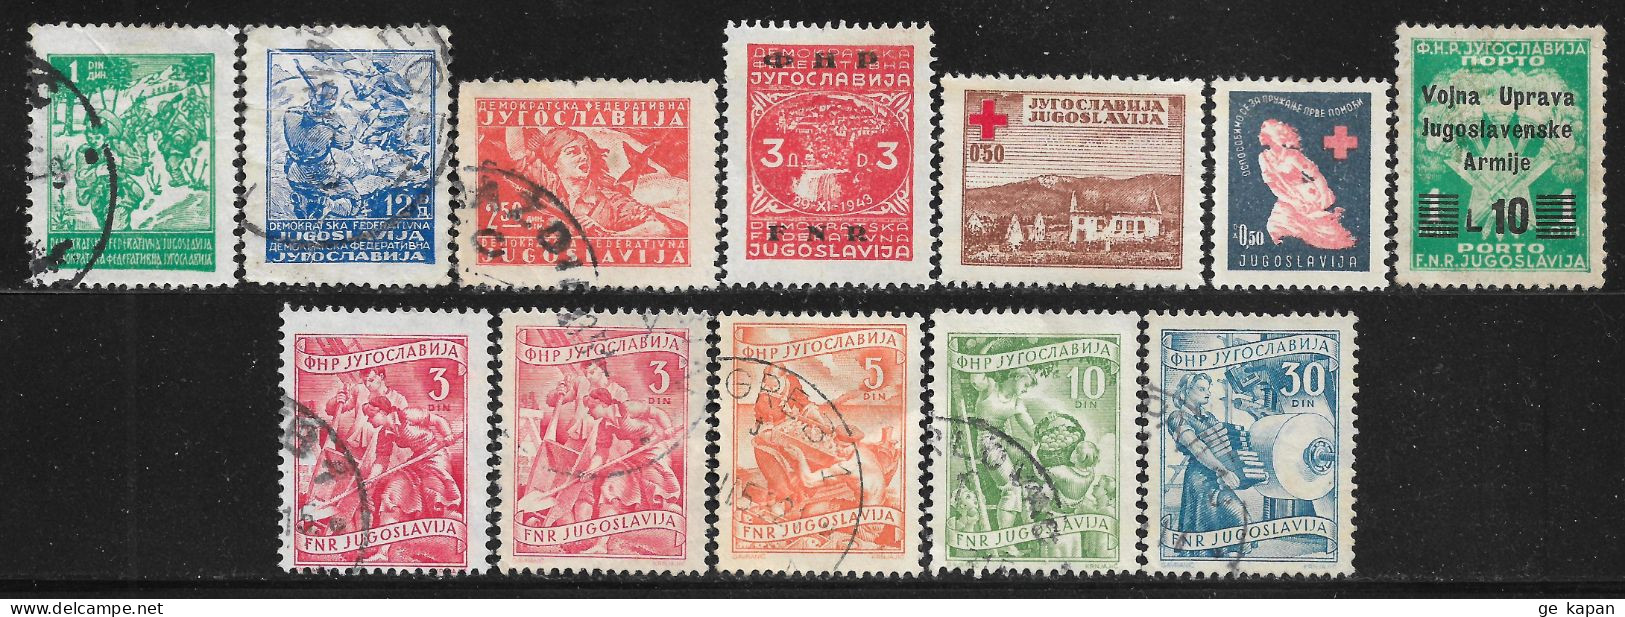 1945-1952 YUGOSLAVIA Set Of 8 Used + 4 MLH Stamps (Scott # 174,182,211,277,RA5,RA6,J23,308,345,346,350) CV $3.00 - Gebraucht